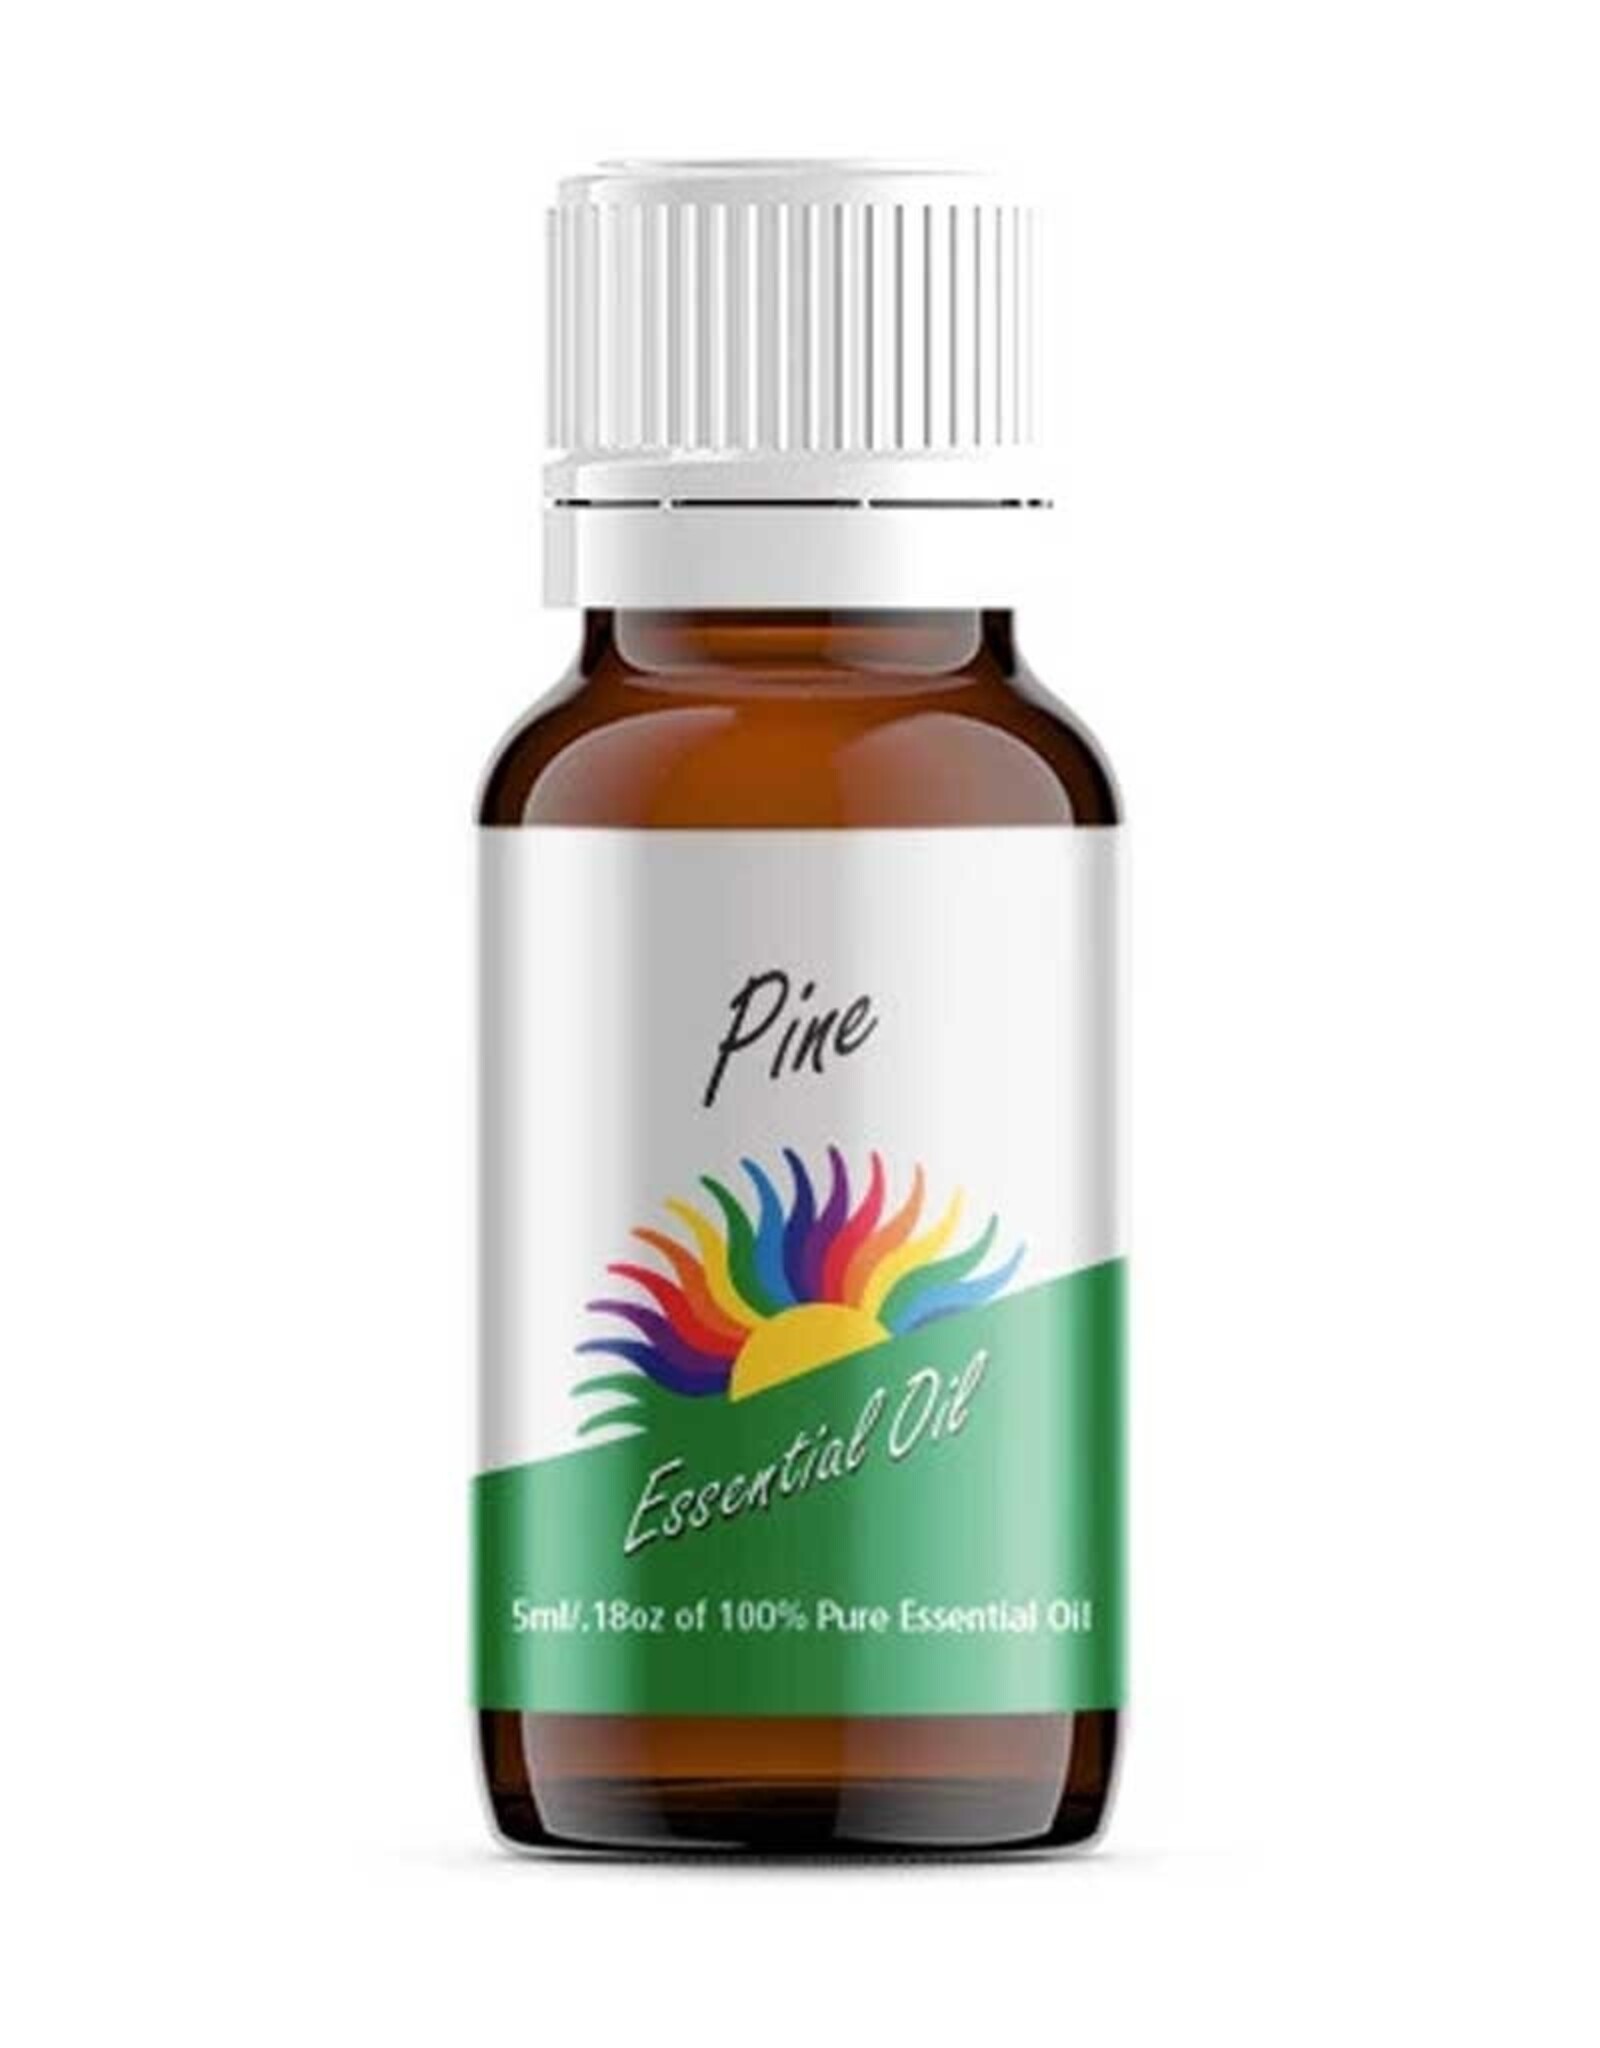 Colour Energy Pine Essential Oil 10ml